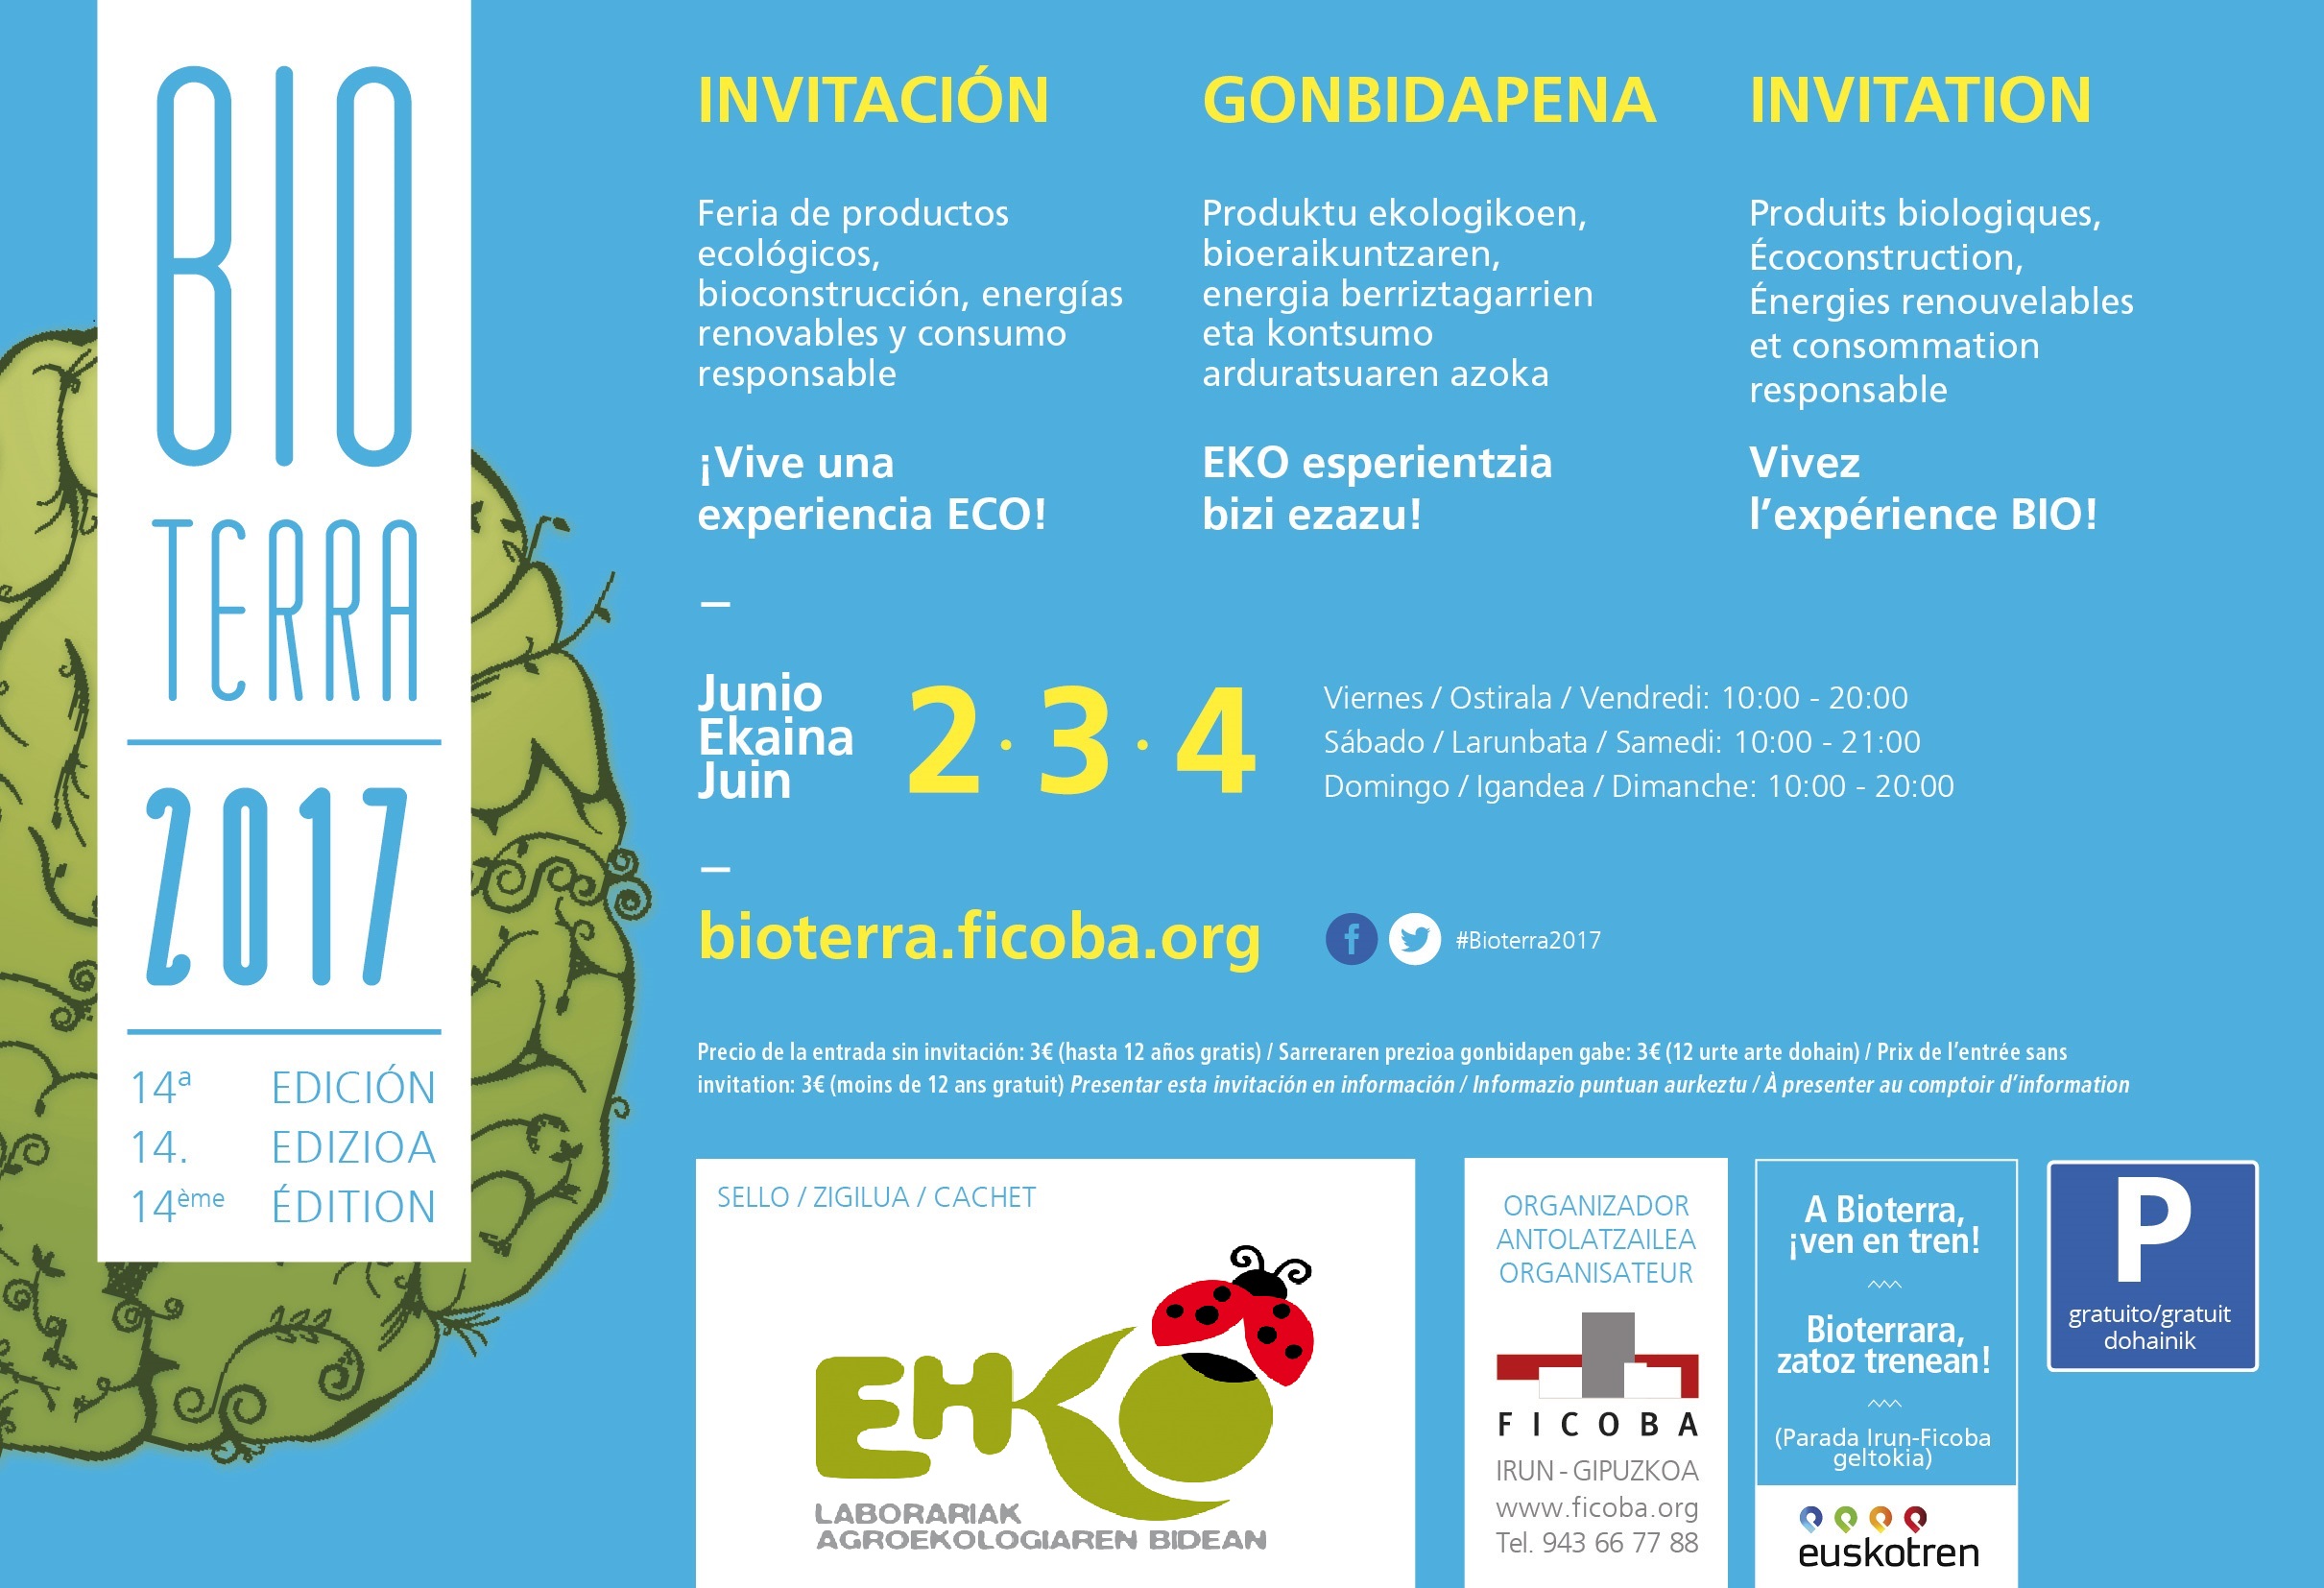 Bioterra2017-invitacion-electronica-EHKO